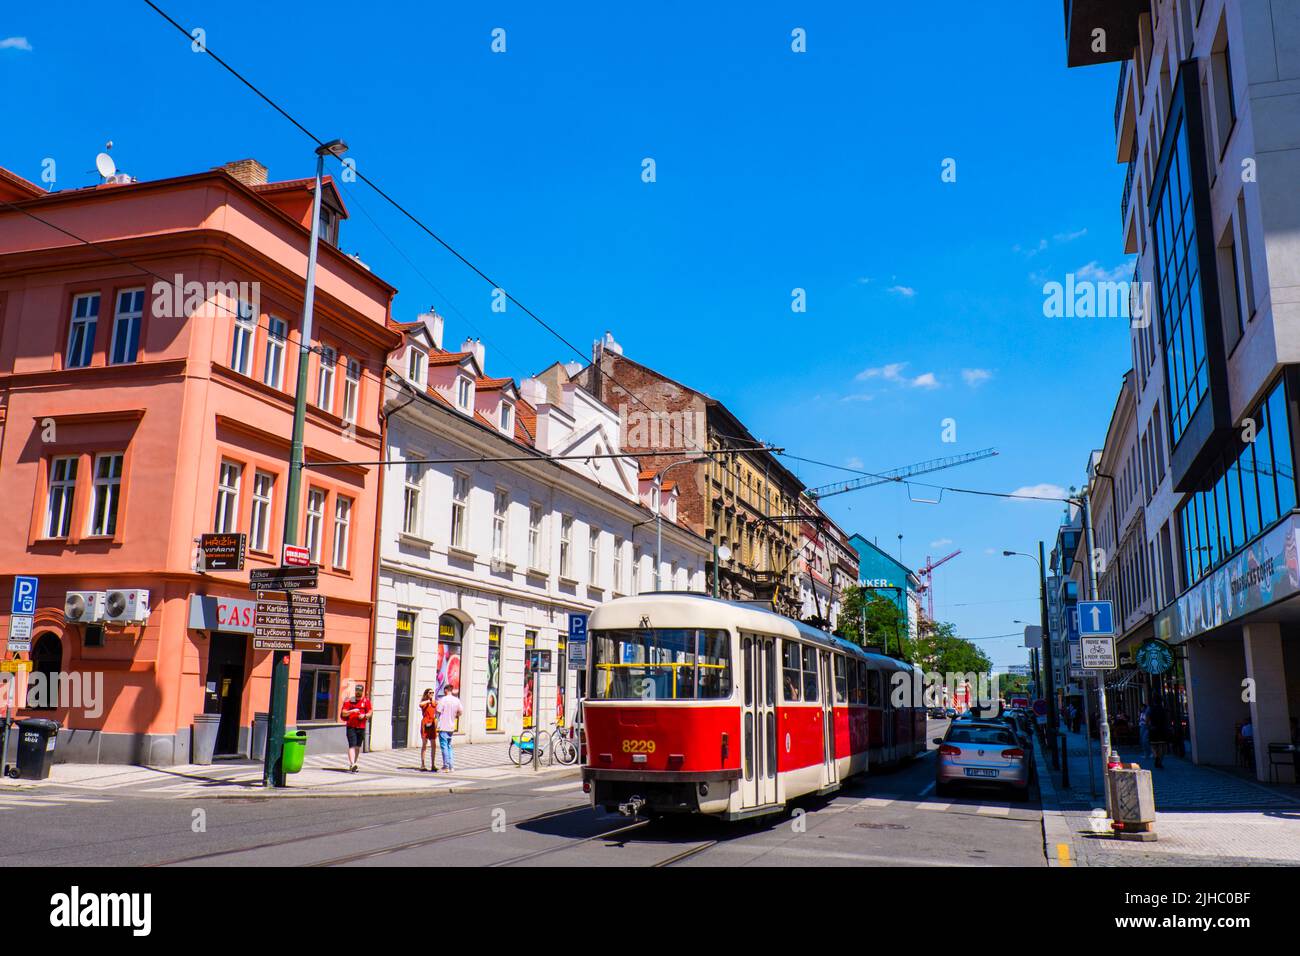 Tram, Krizikova, Karlin, Prague, Czech Republic Stock Photo